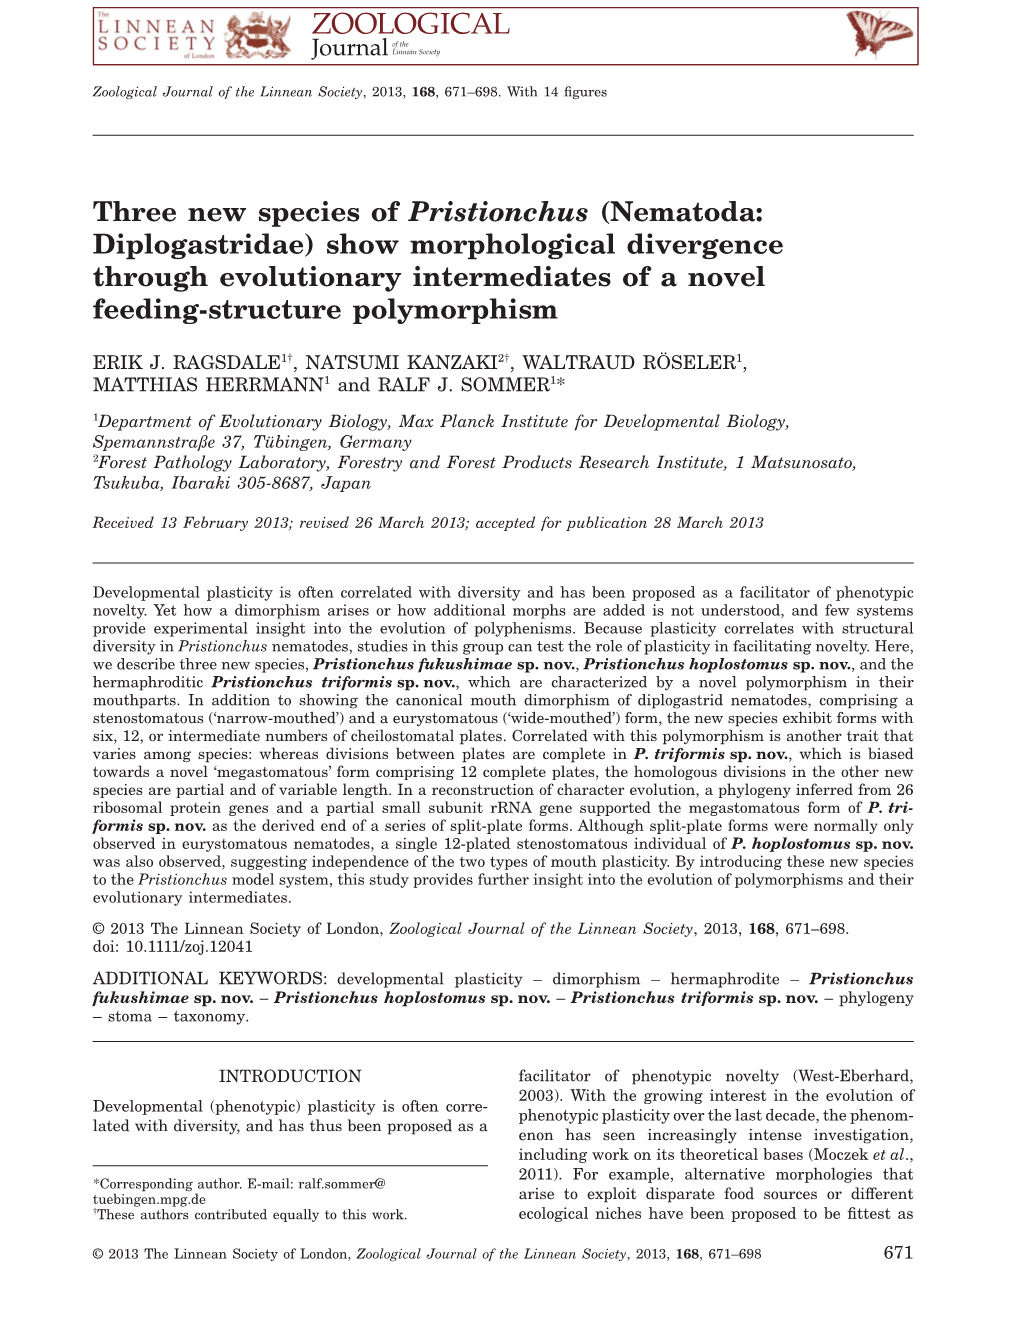 Three New Species of Pristionchus (Nematoda: Diplogastridae) Show